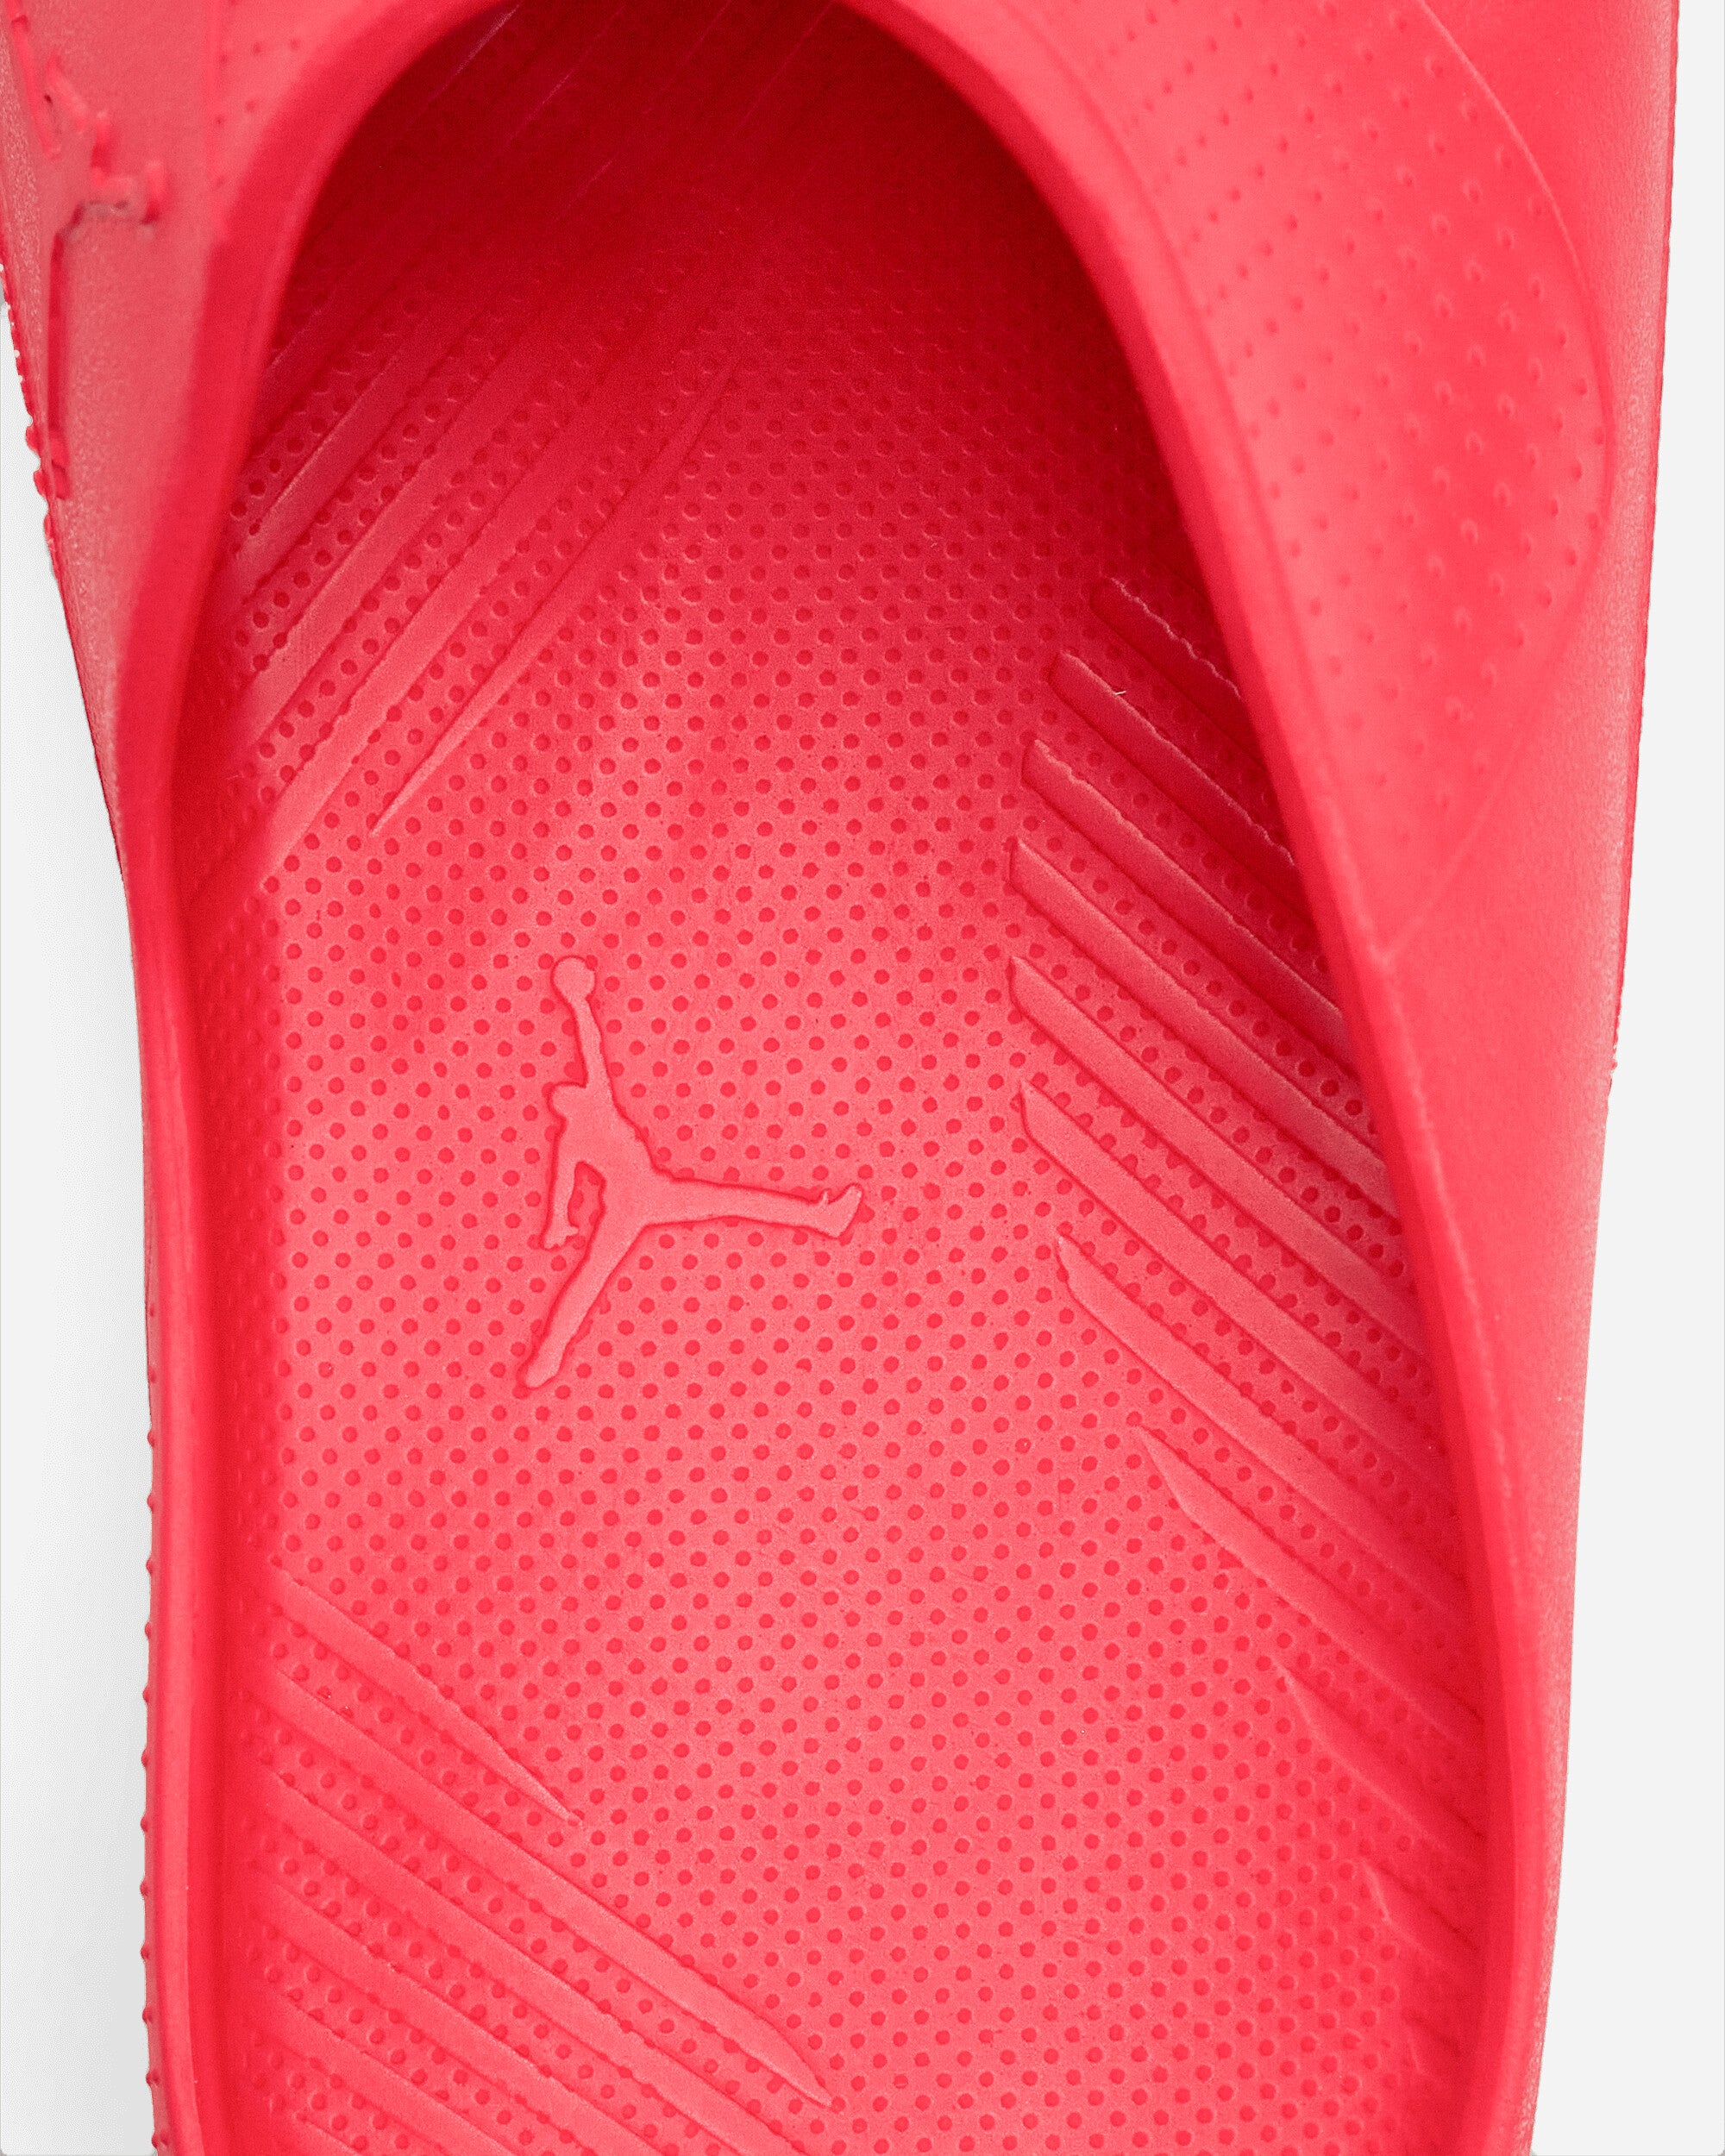 Nike Jordan Jordan Post Slide University Red/University Red Sneakers Low DX5575-600